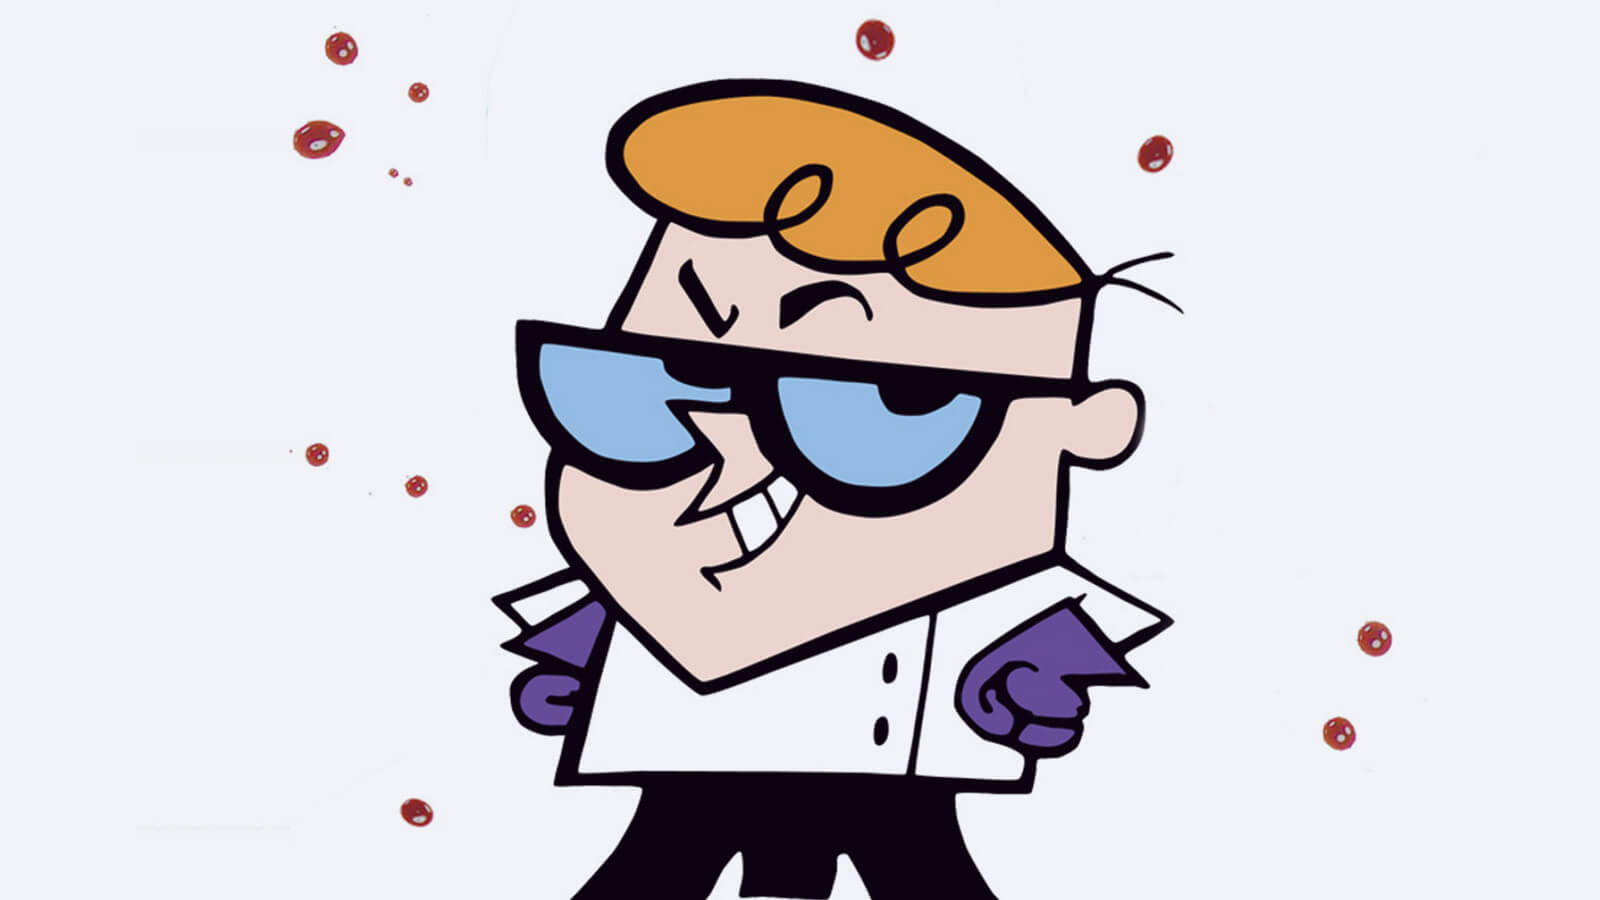 Dexter from “Dexter's Laboratory”